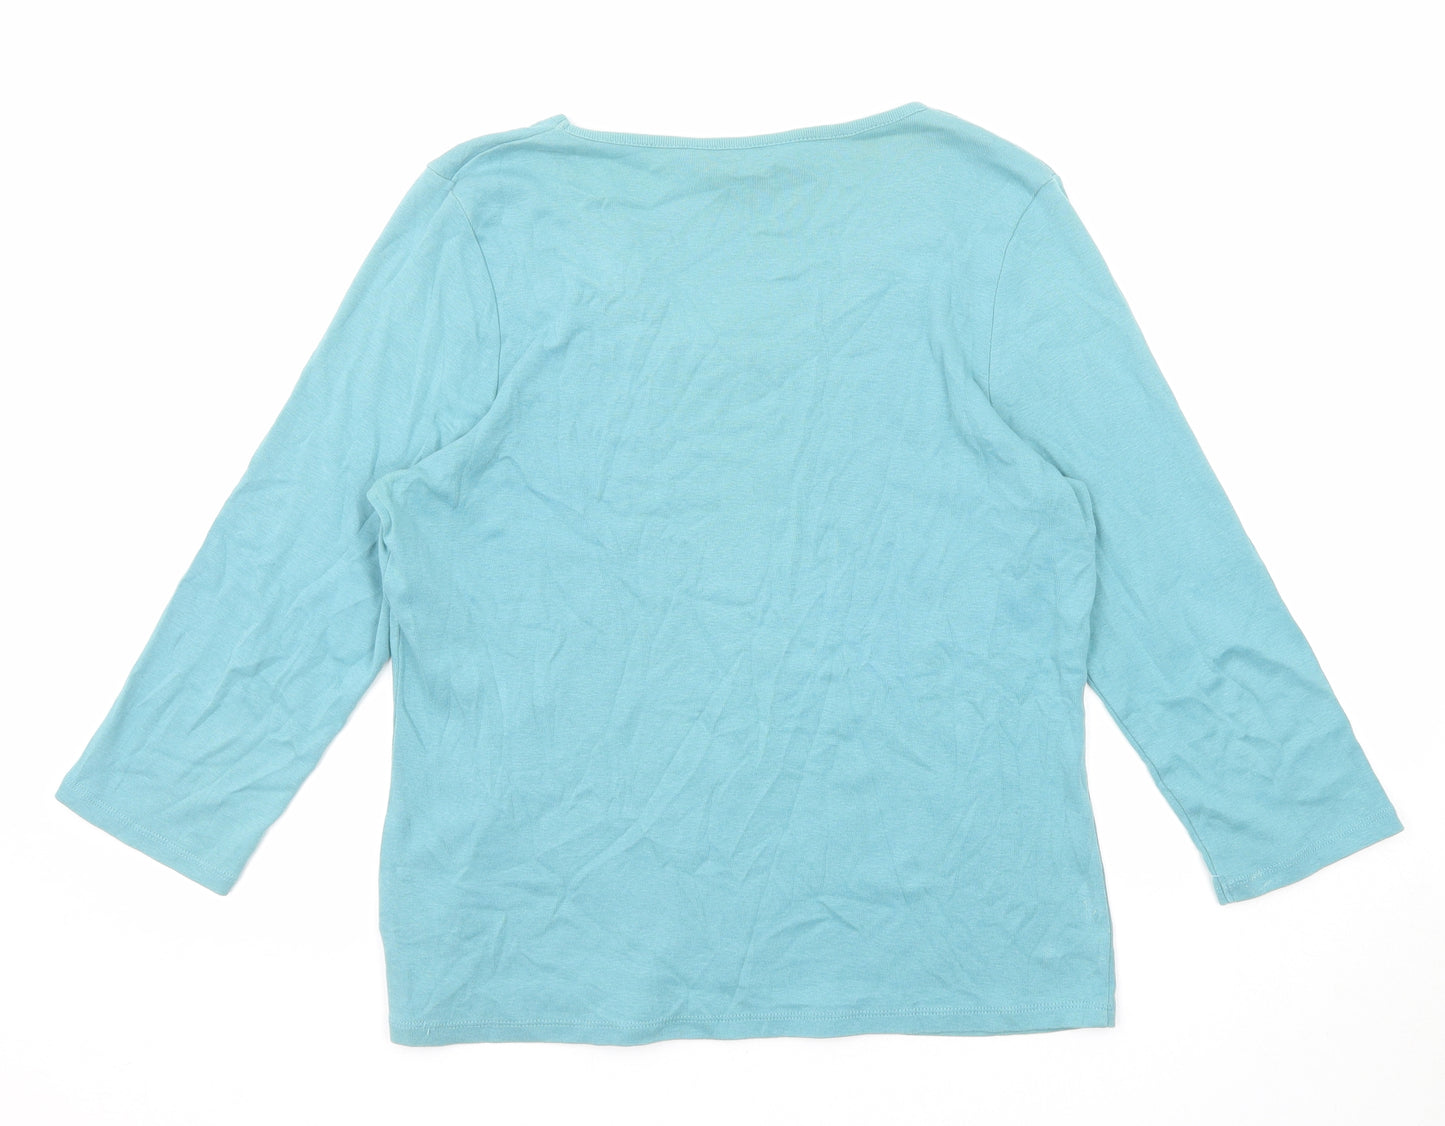 BHS Womens Blue Cotton Basic T-Shirt Size 16 Scoop Neck